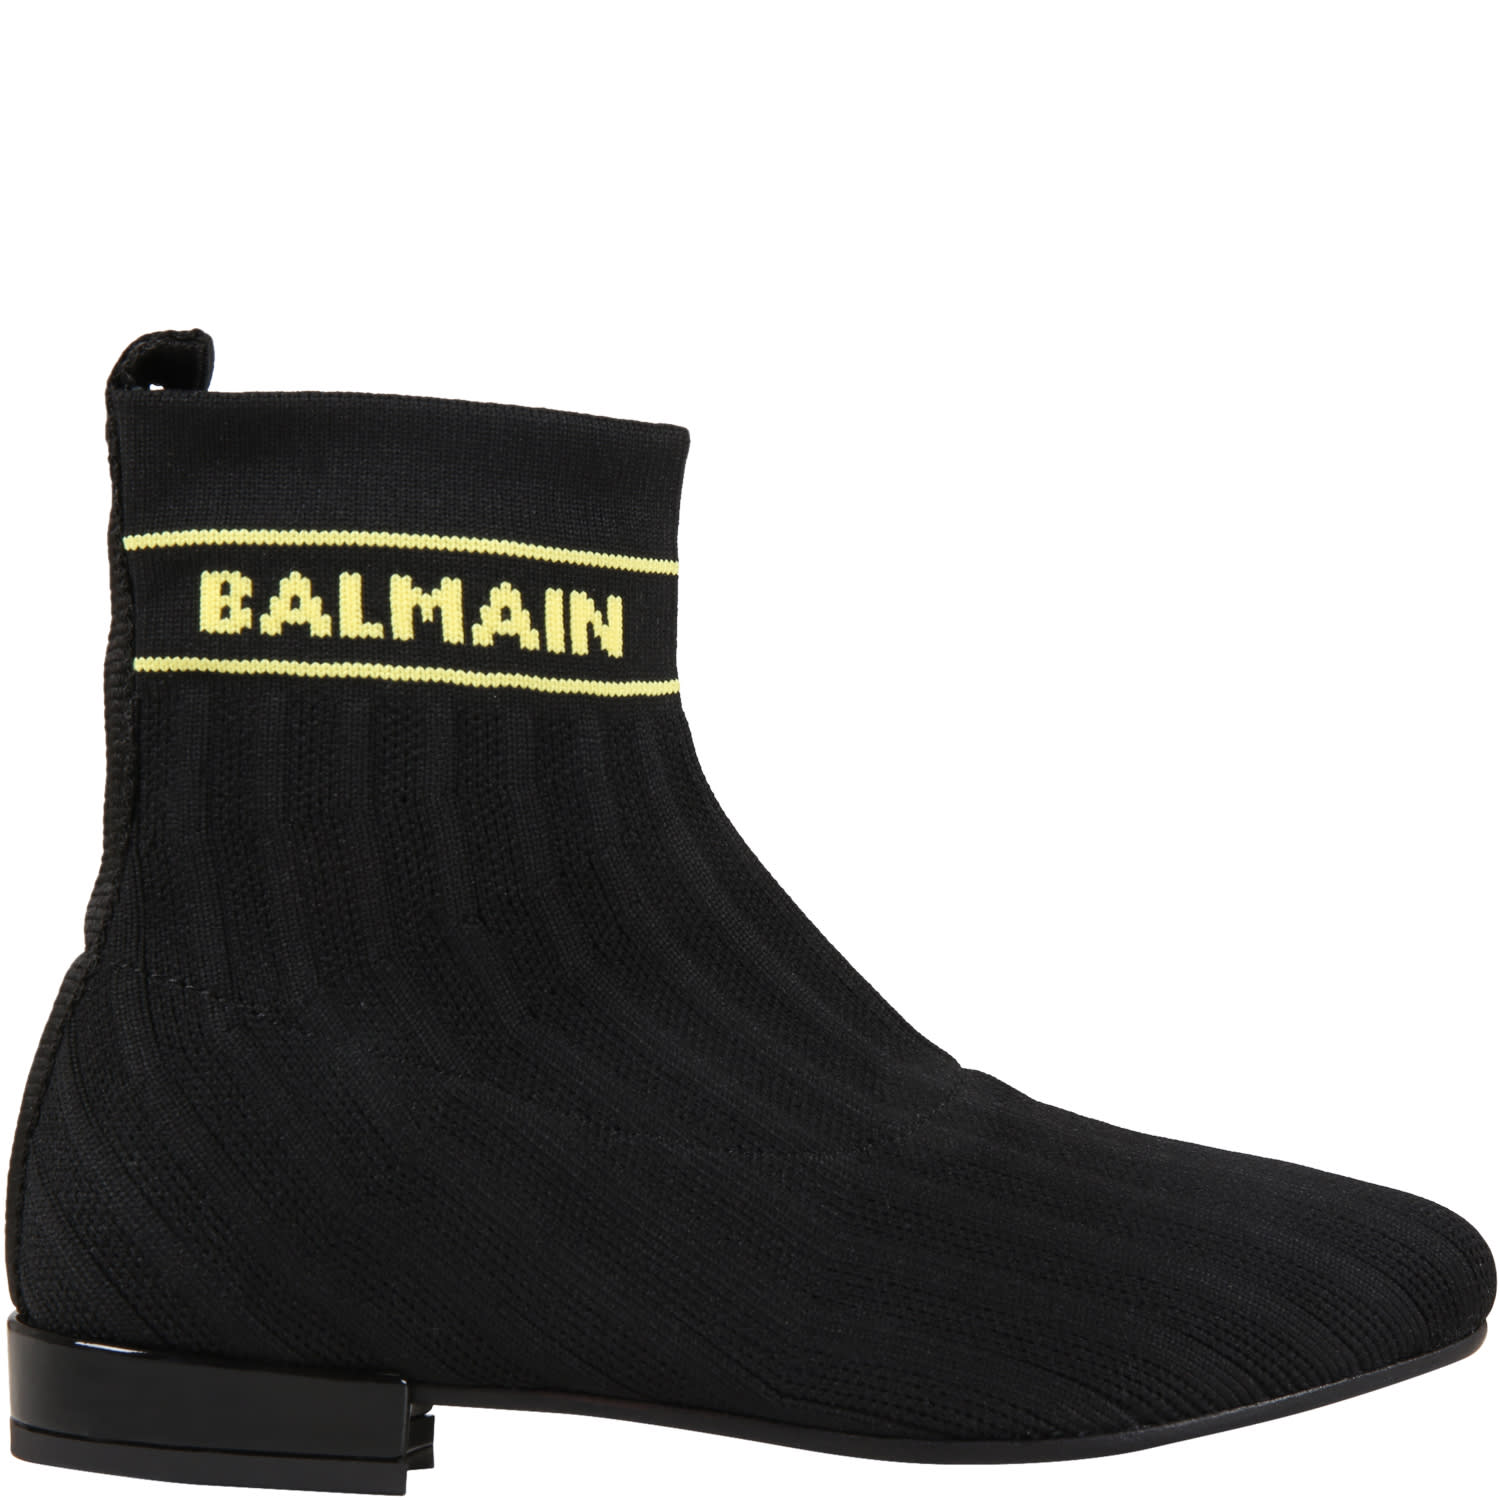 Buy Balmain Black Boots For Girl online, shop Balmain shoes with free shipping